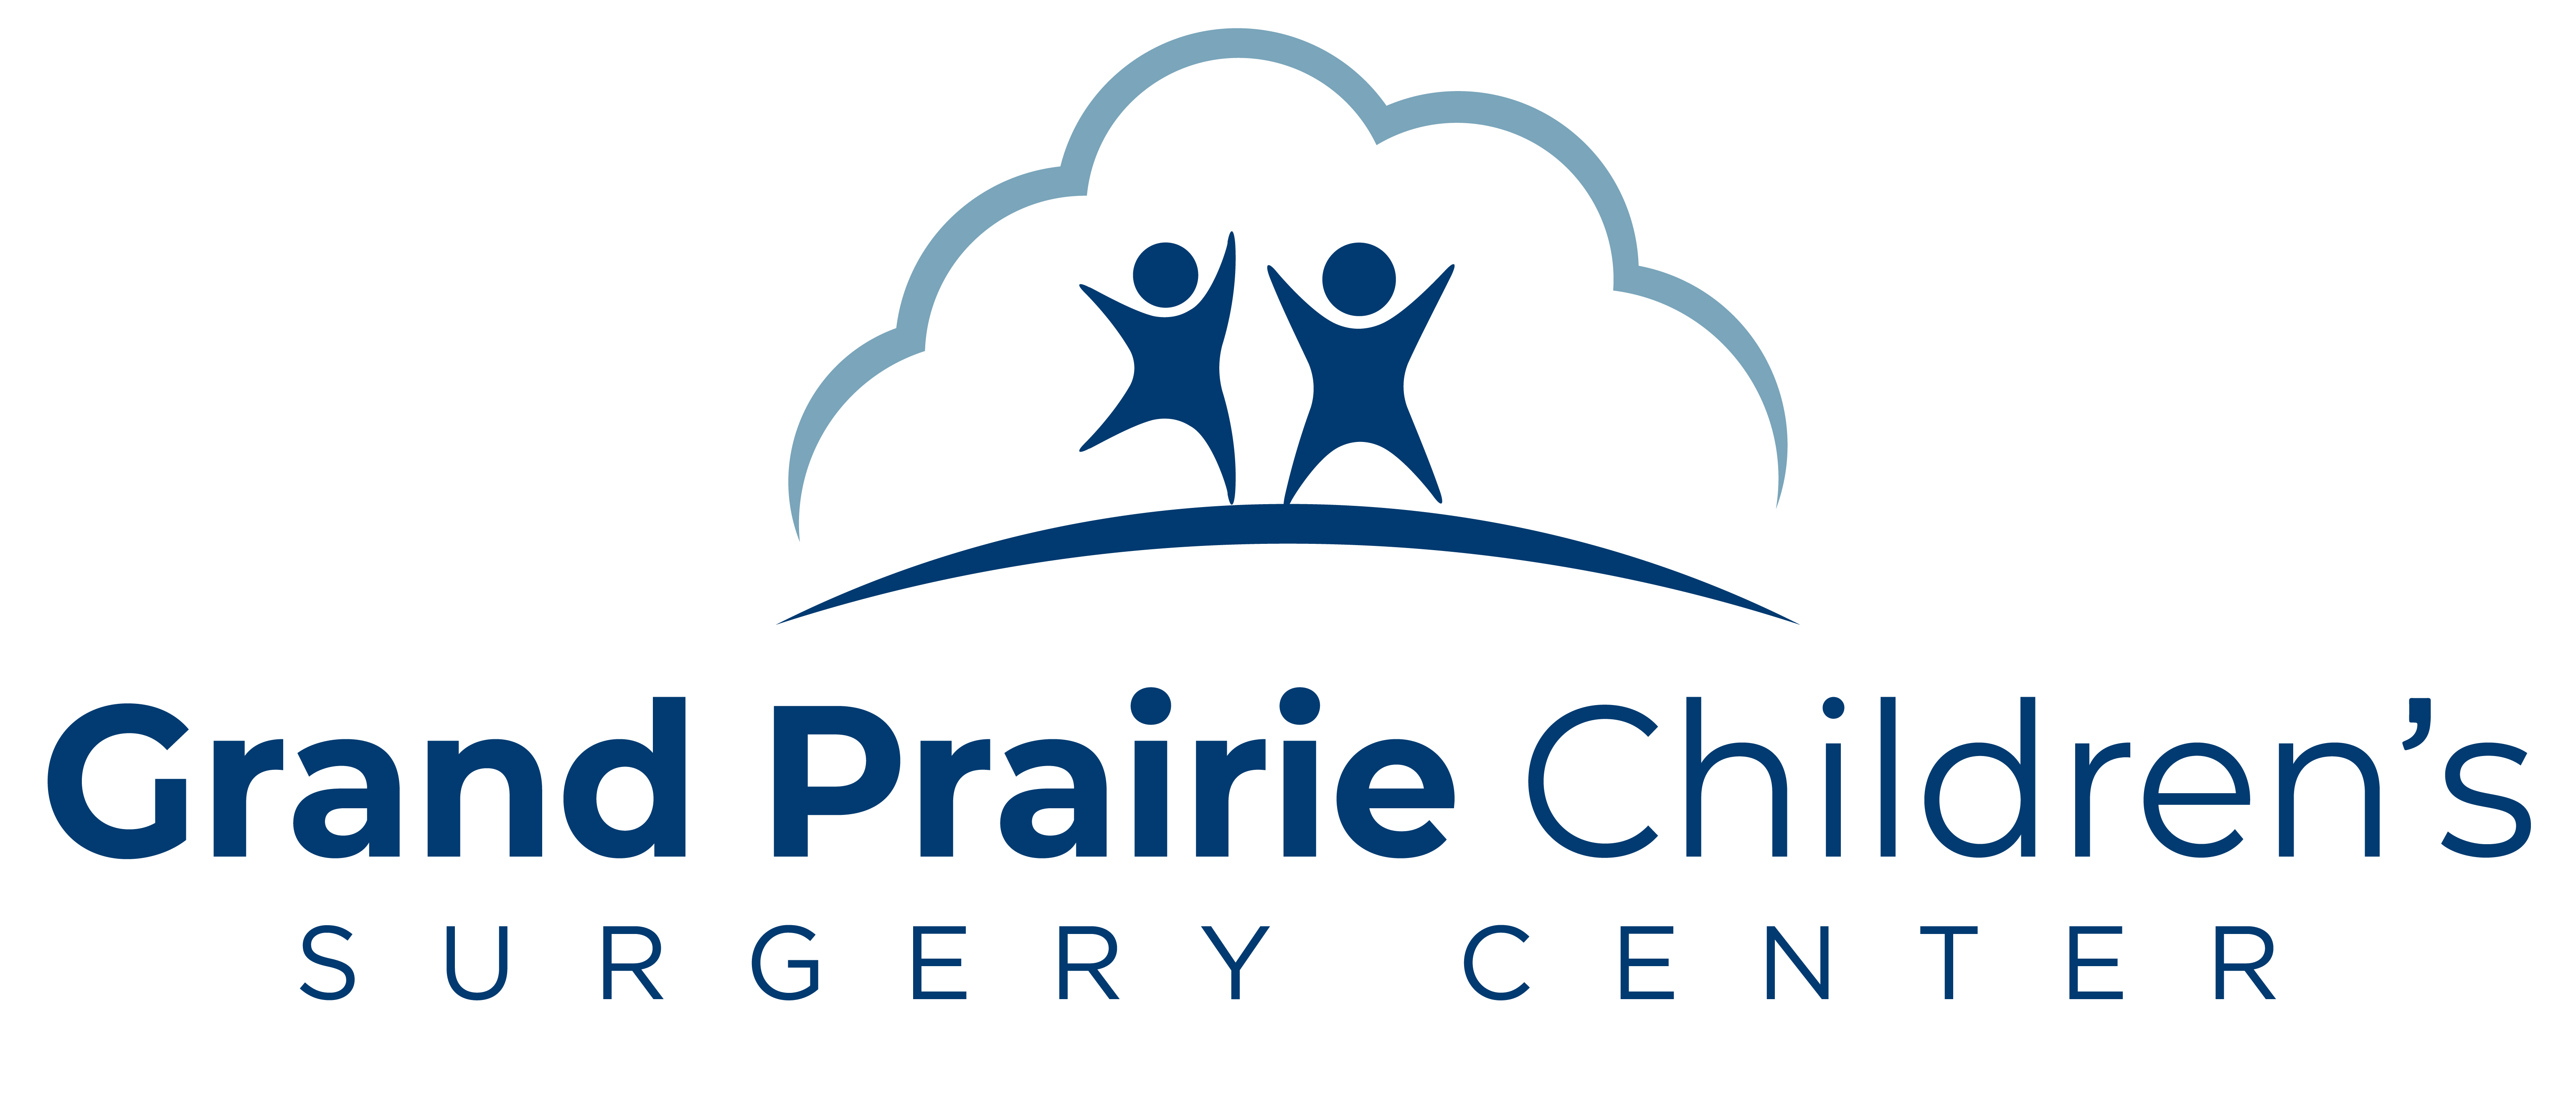 Grand Prairie Children’s Surgery Center